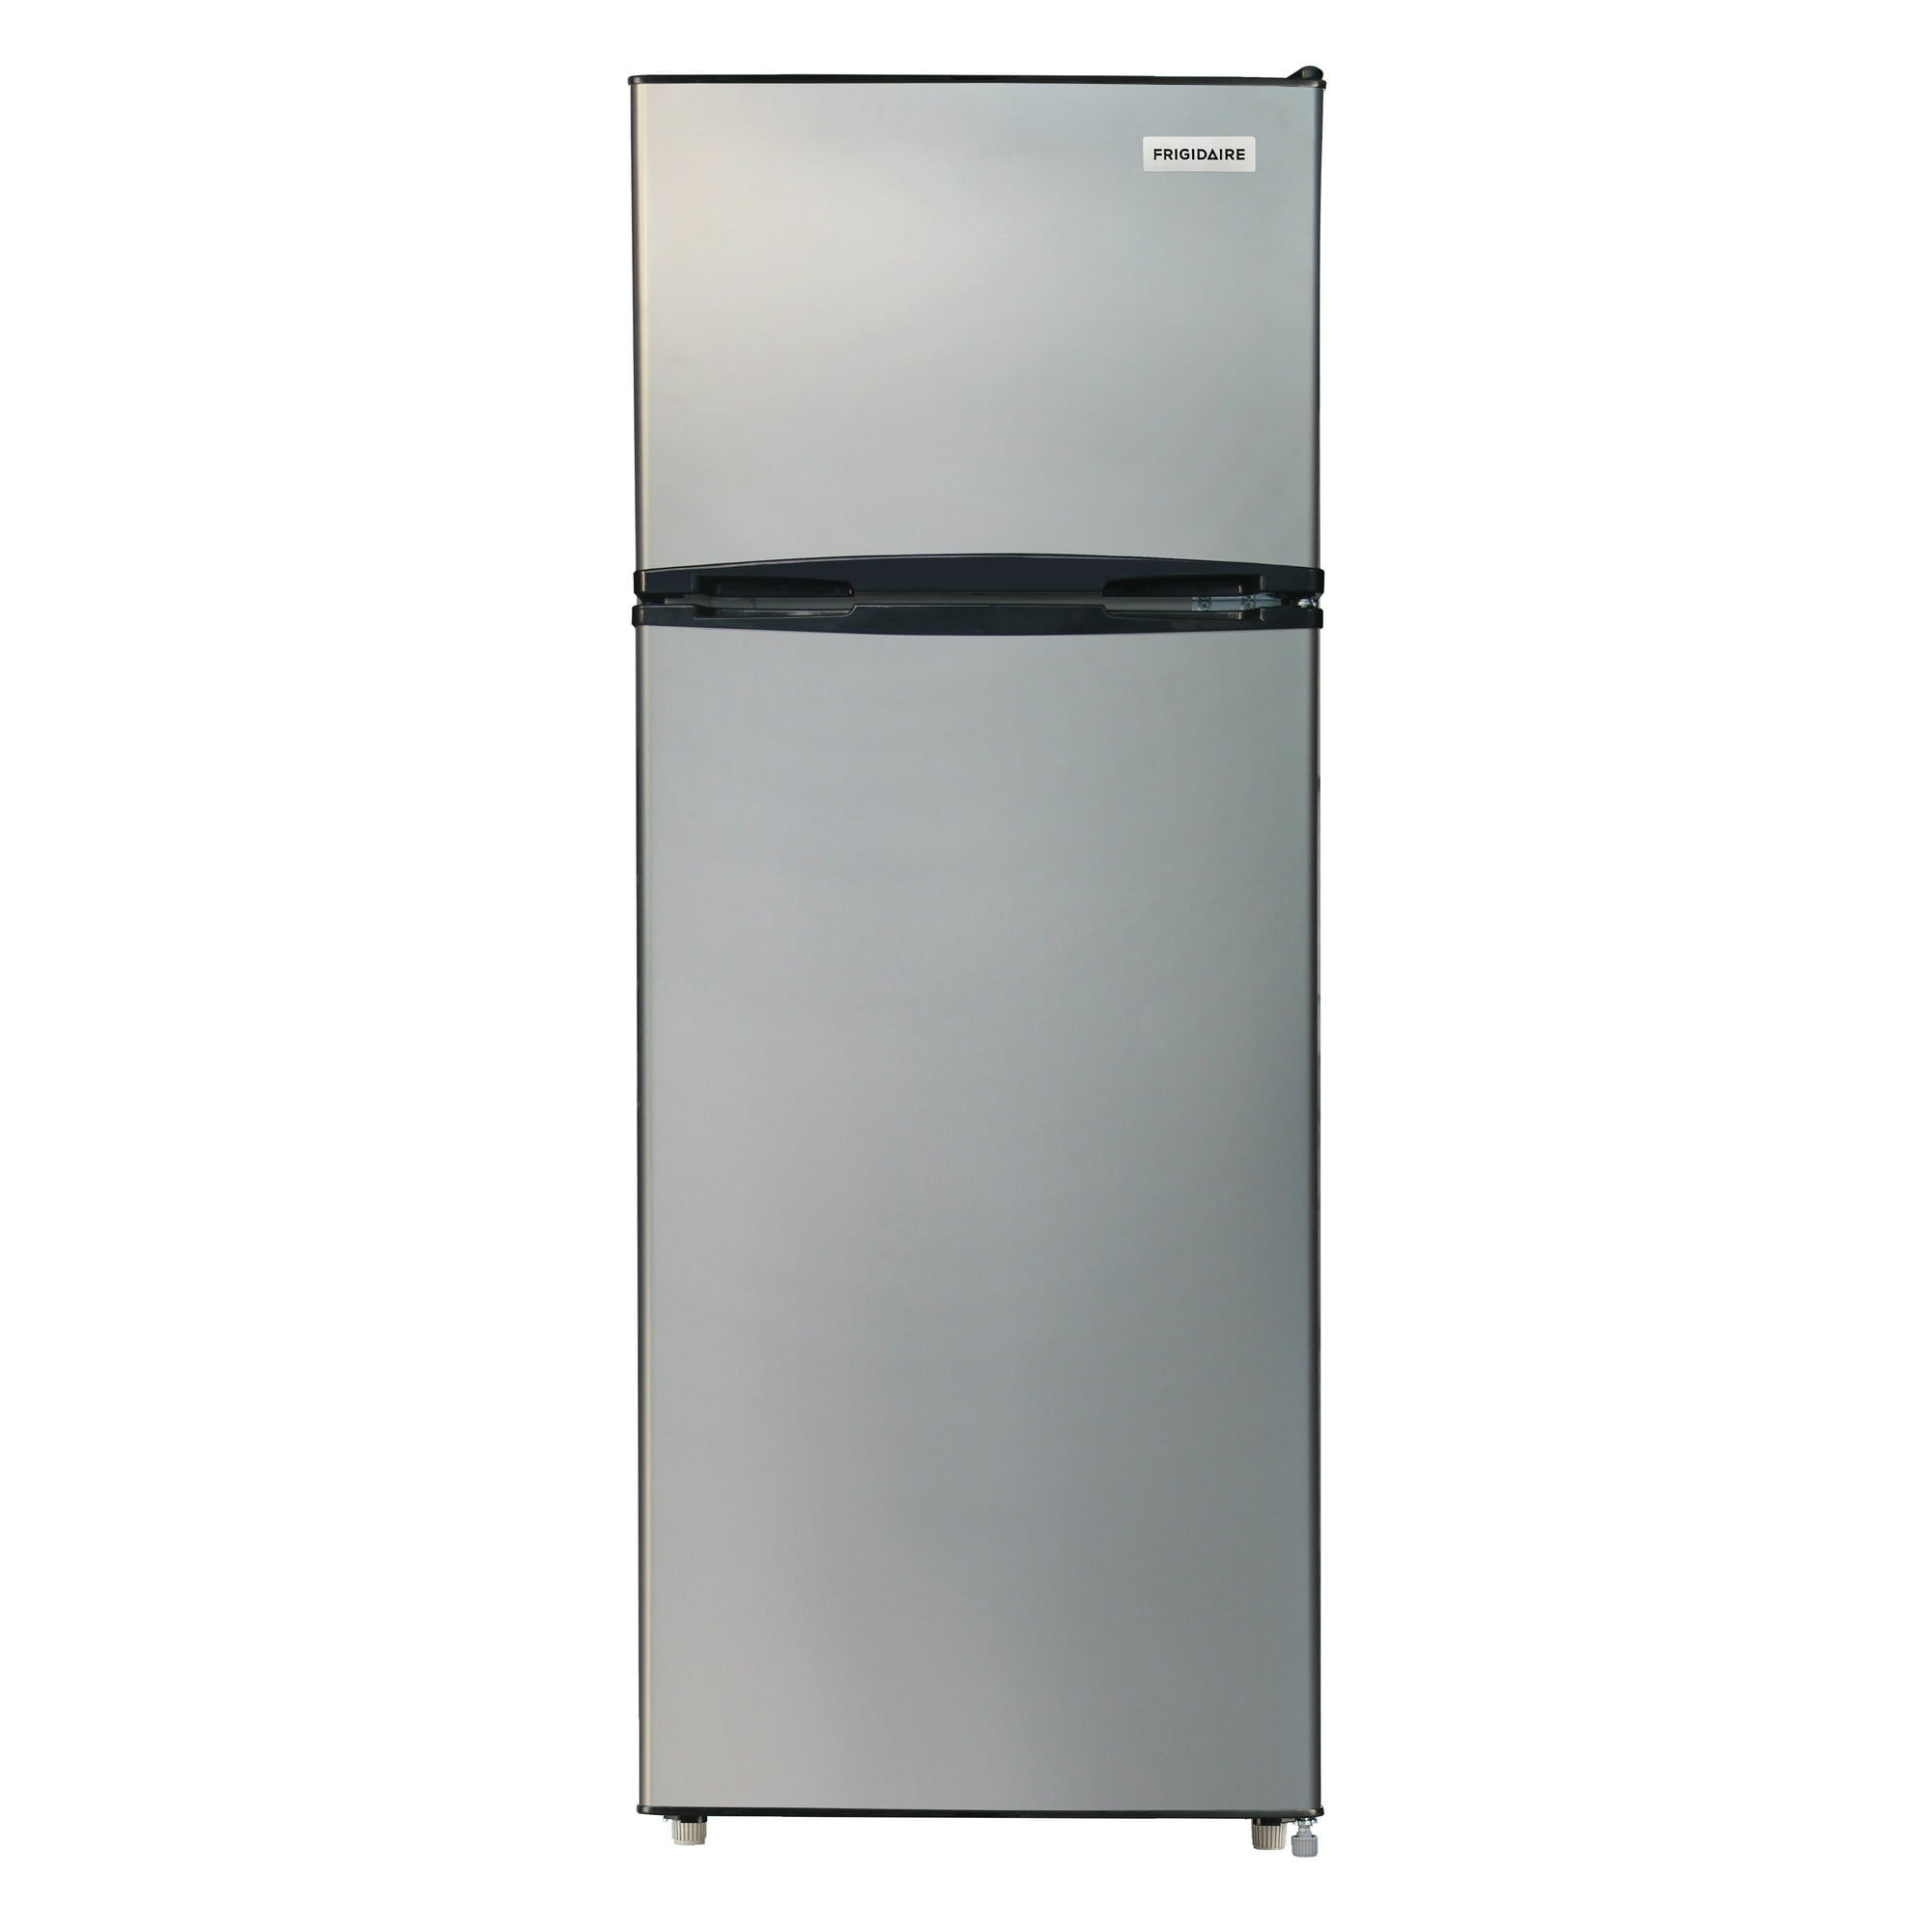 7.5 cu. ft. Frigidaire Platinum Series Refrigerator (Stainless Look) $198 + Free Shipping